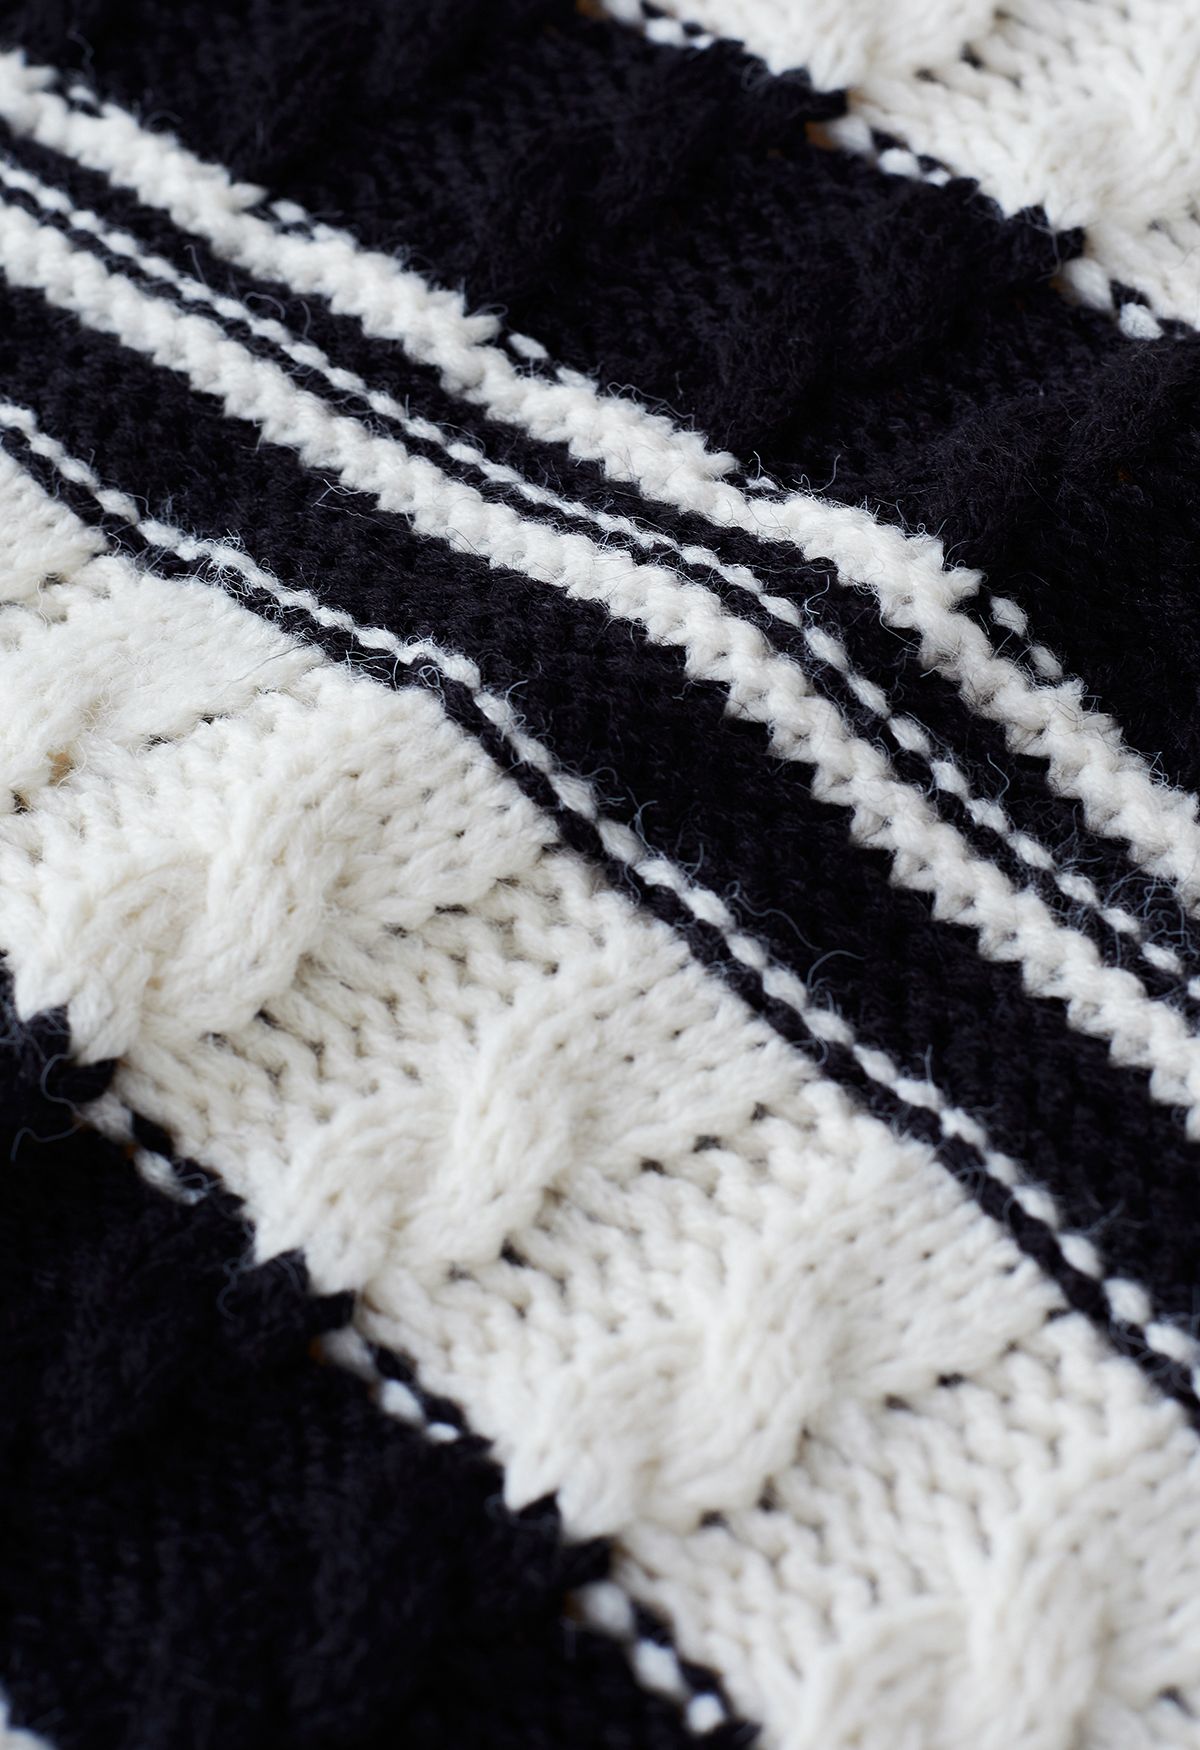 Fringed Hem Braided Knit Sweater in Black